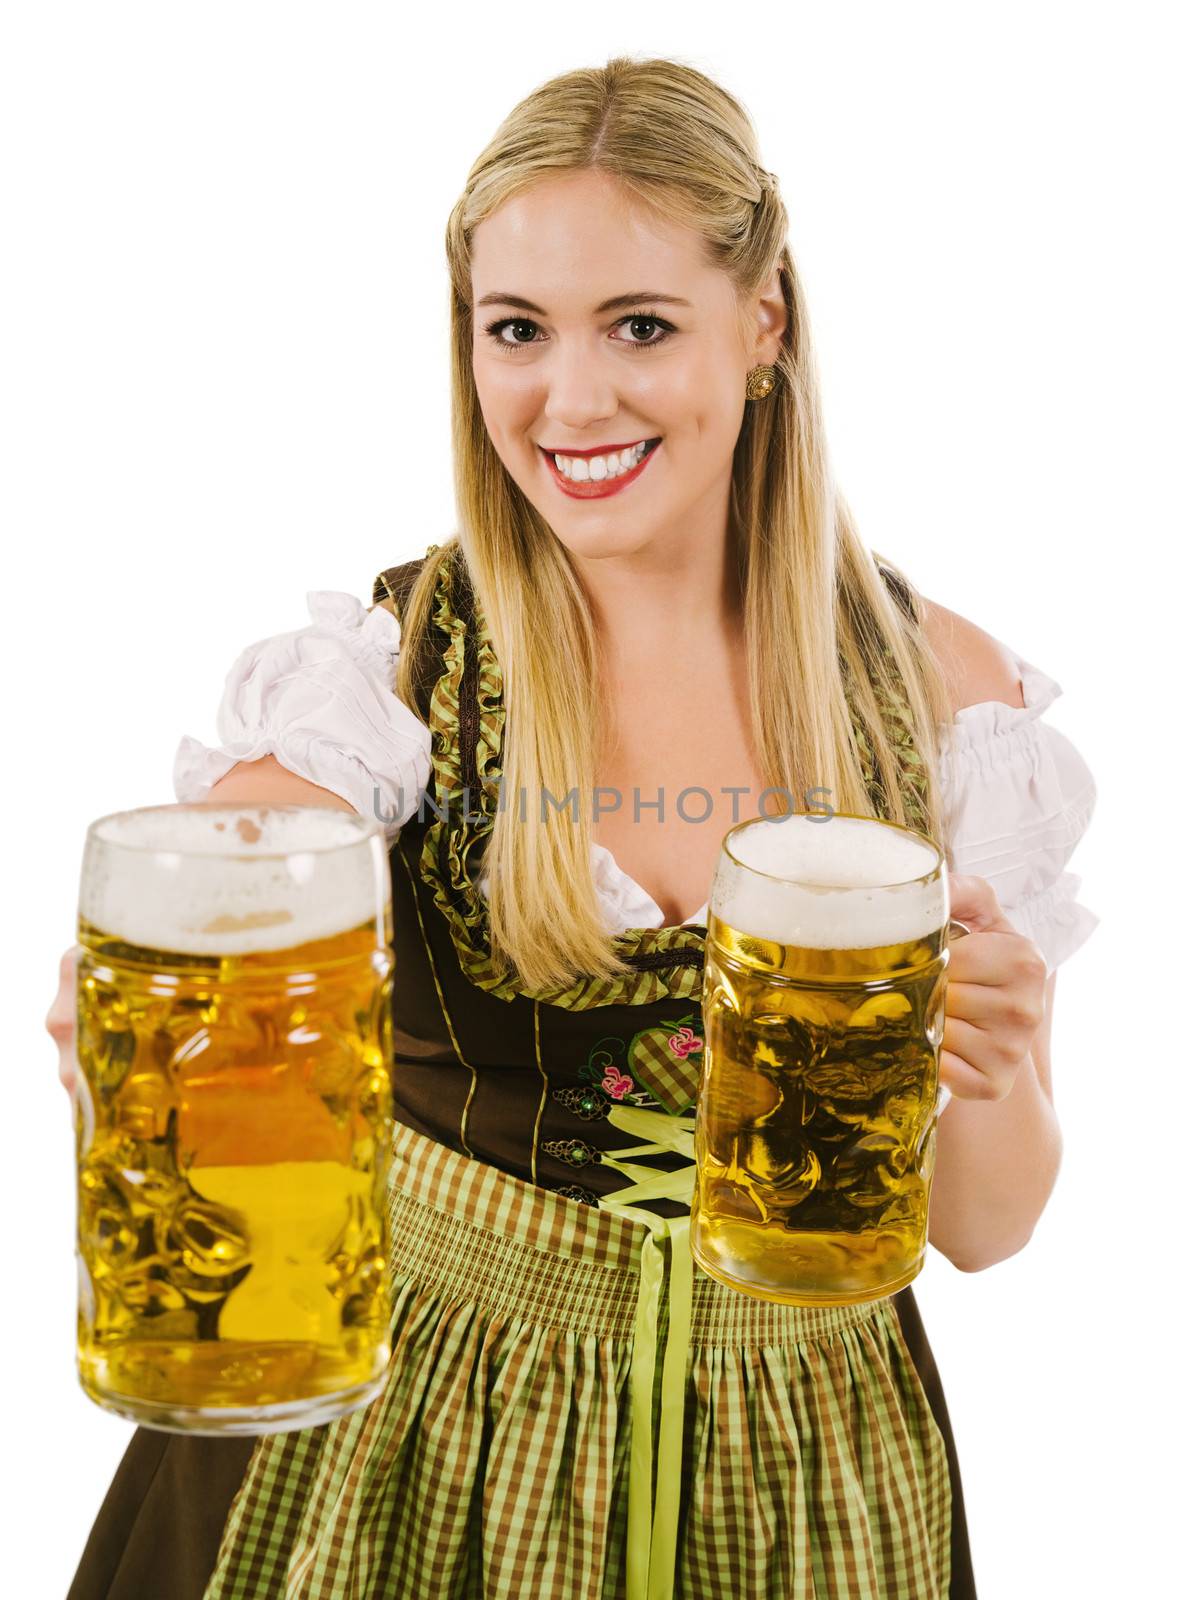 Happy blond serving beer during Oktoberfest by sumners